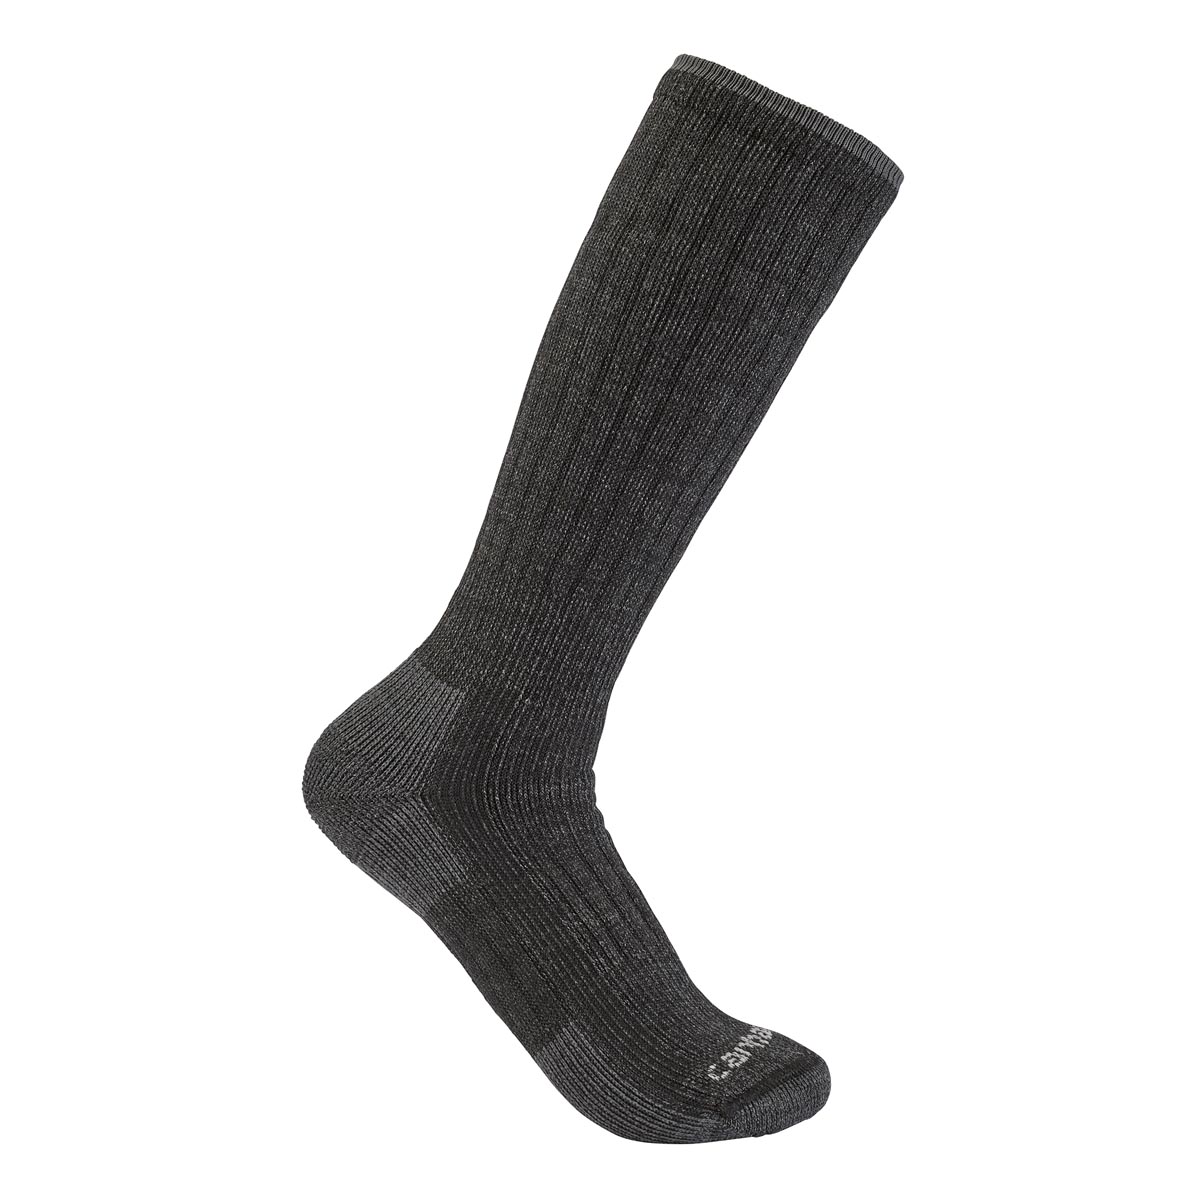 Carhartt Men's Midweight Synthetic Wool Blend Boot Sock